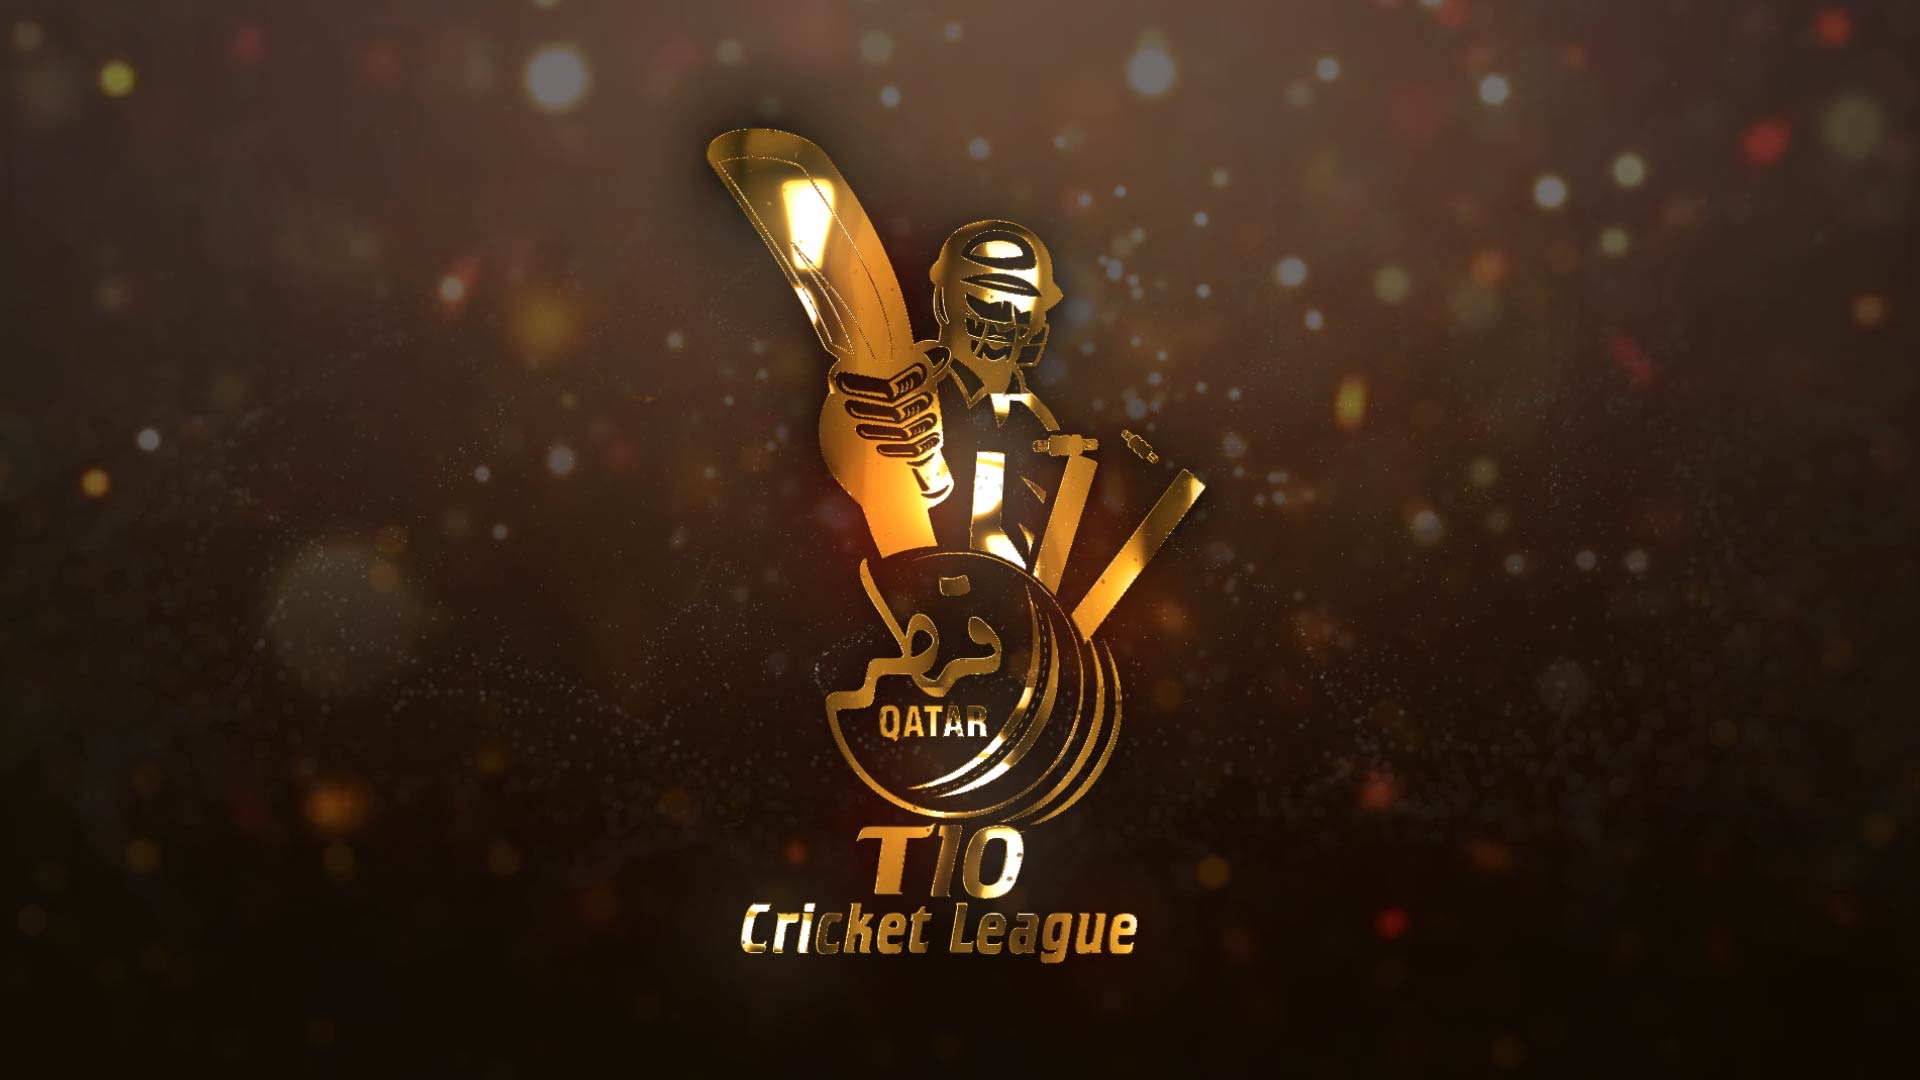 Qatar T10 Cricket League - HD Wallpaper 